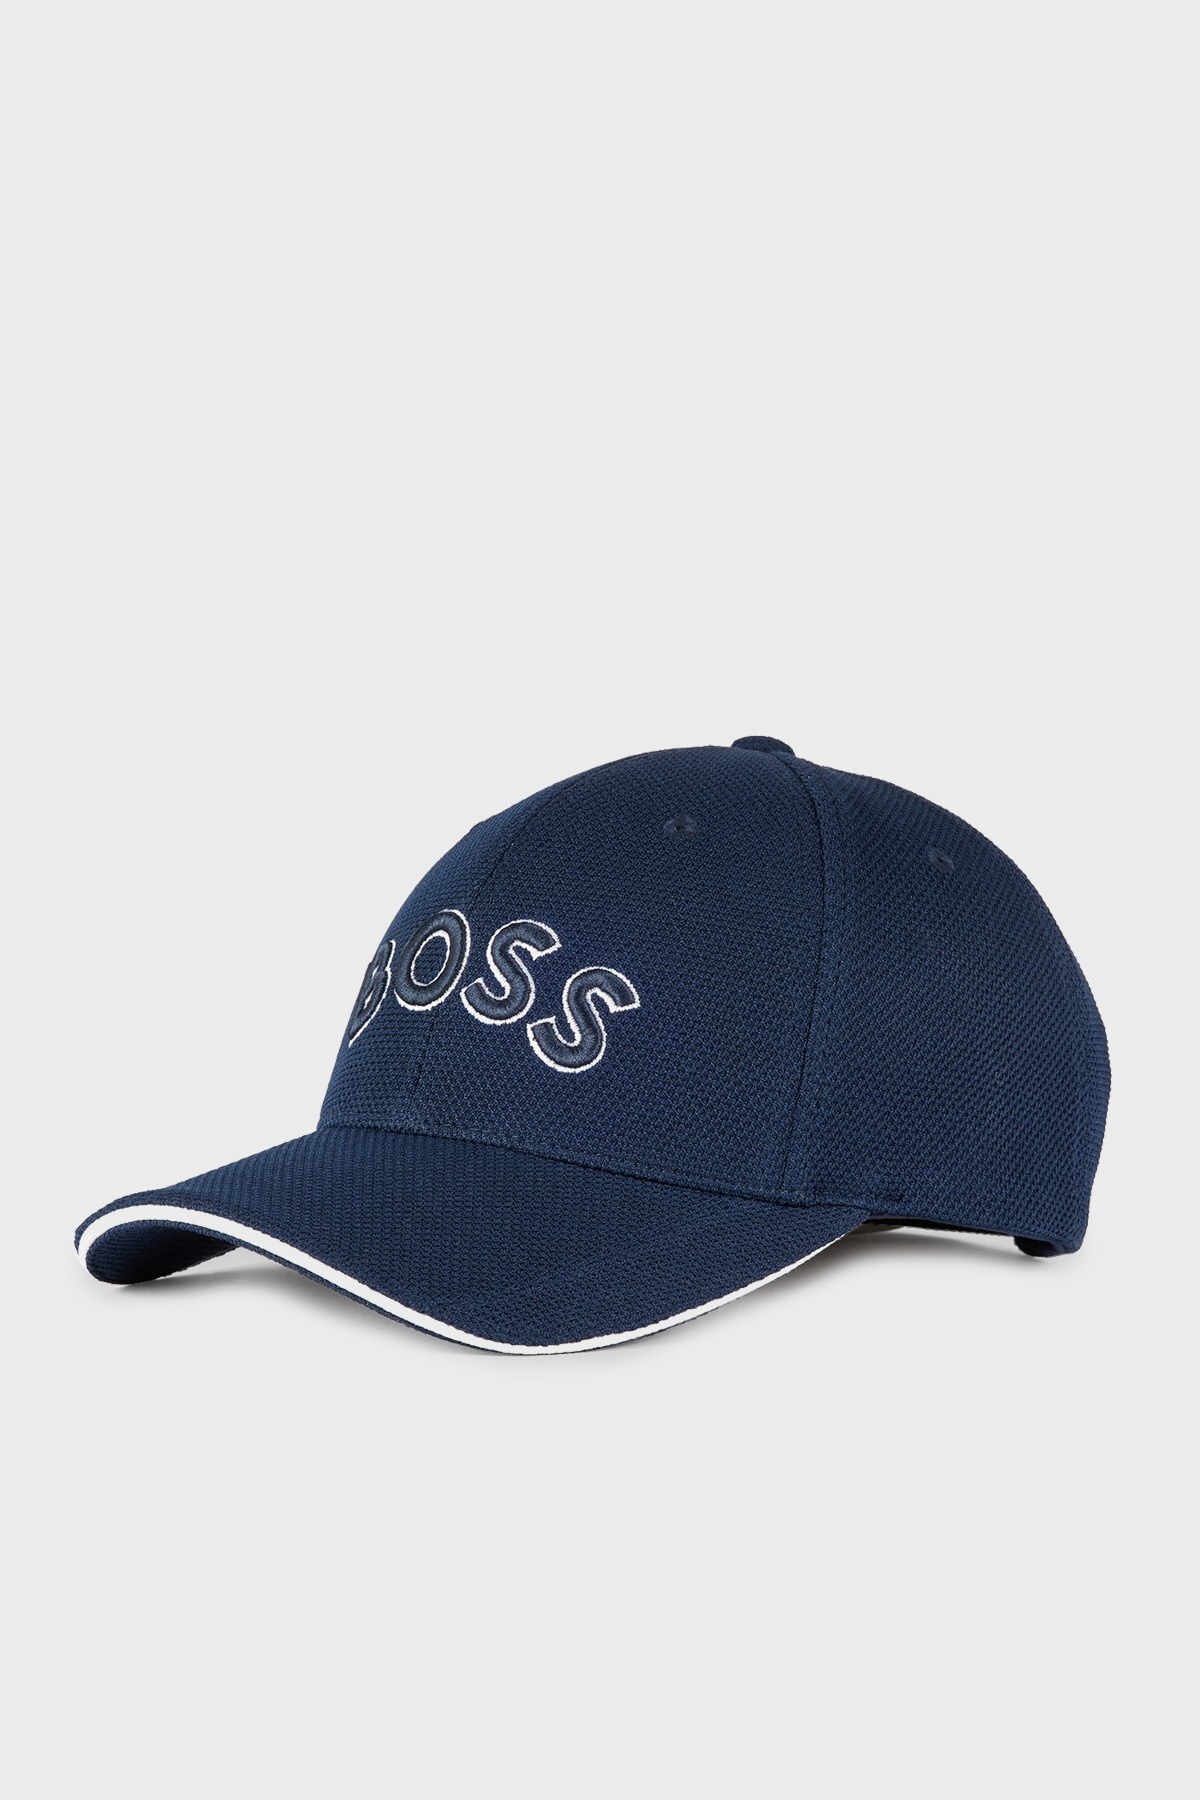 Boss Logo İşlemeli Erkek Şapka 50468264 402 LACİVERT